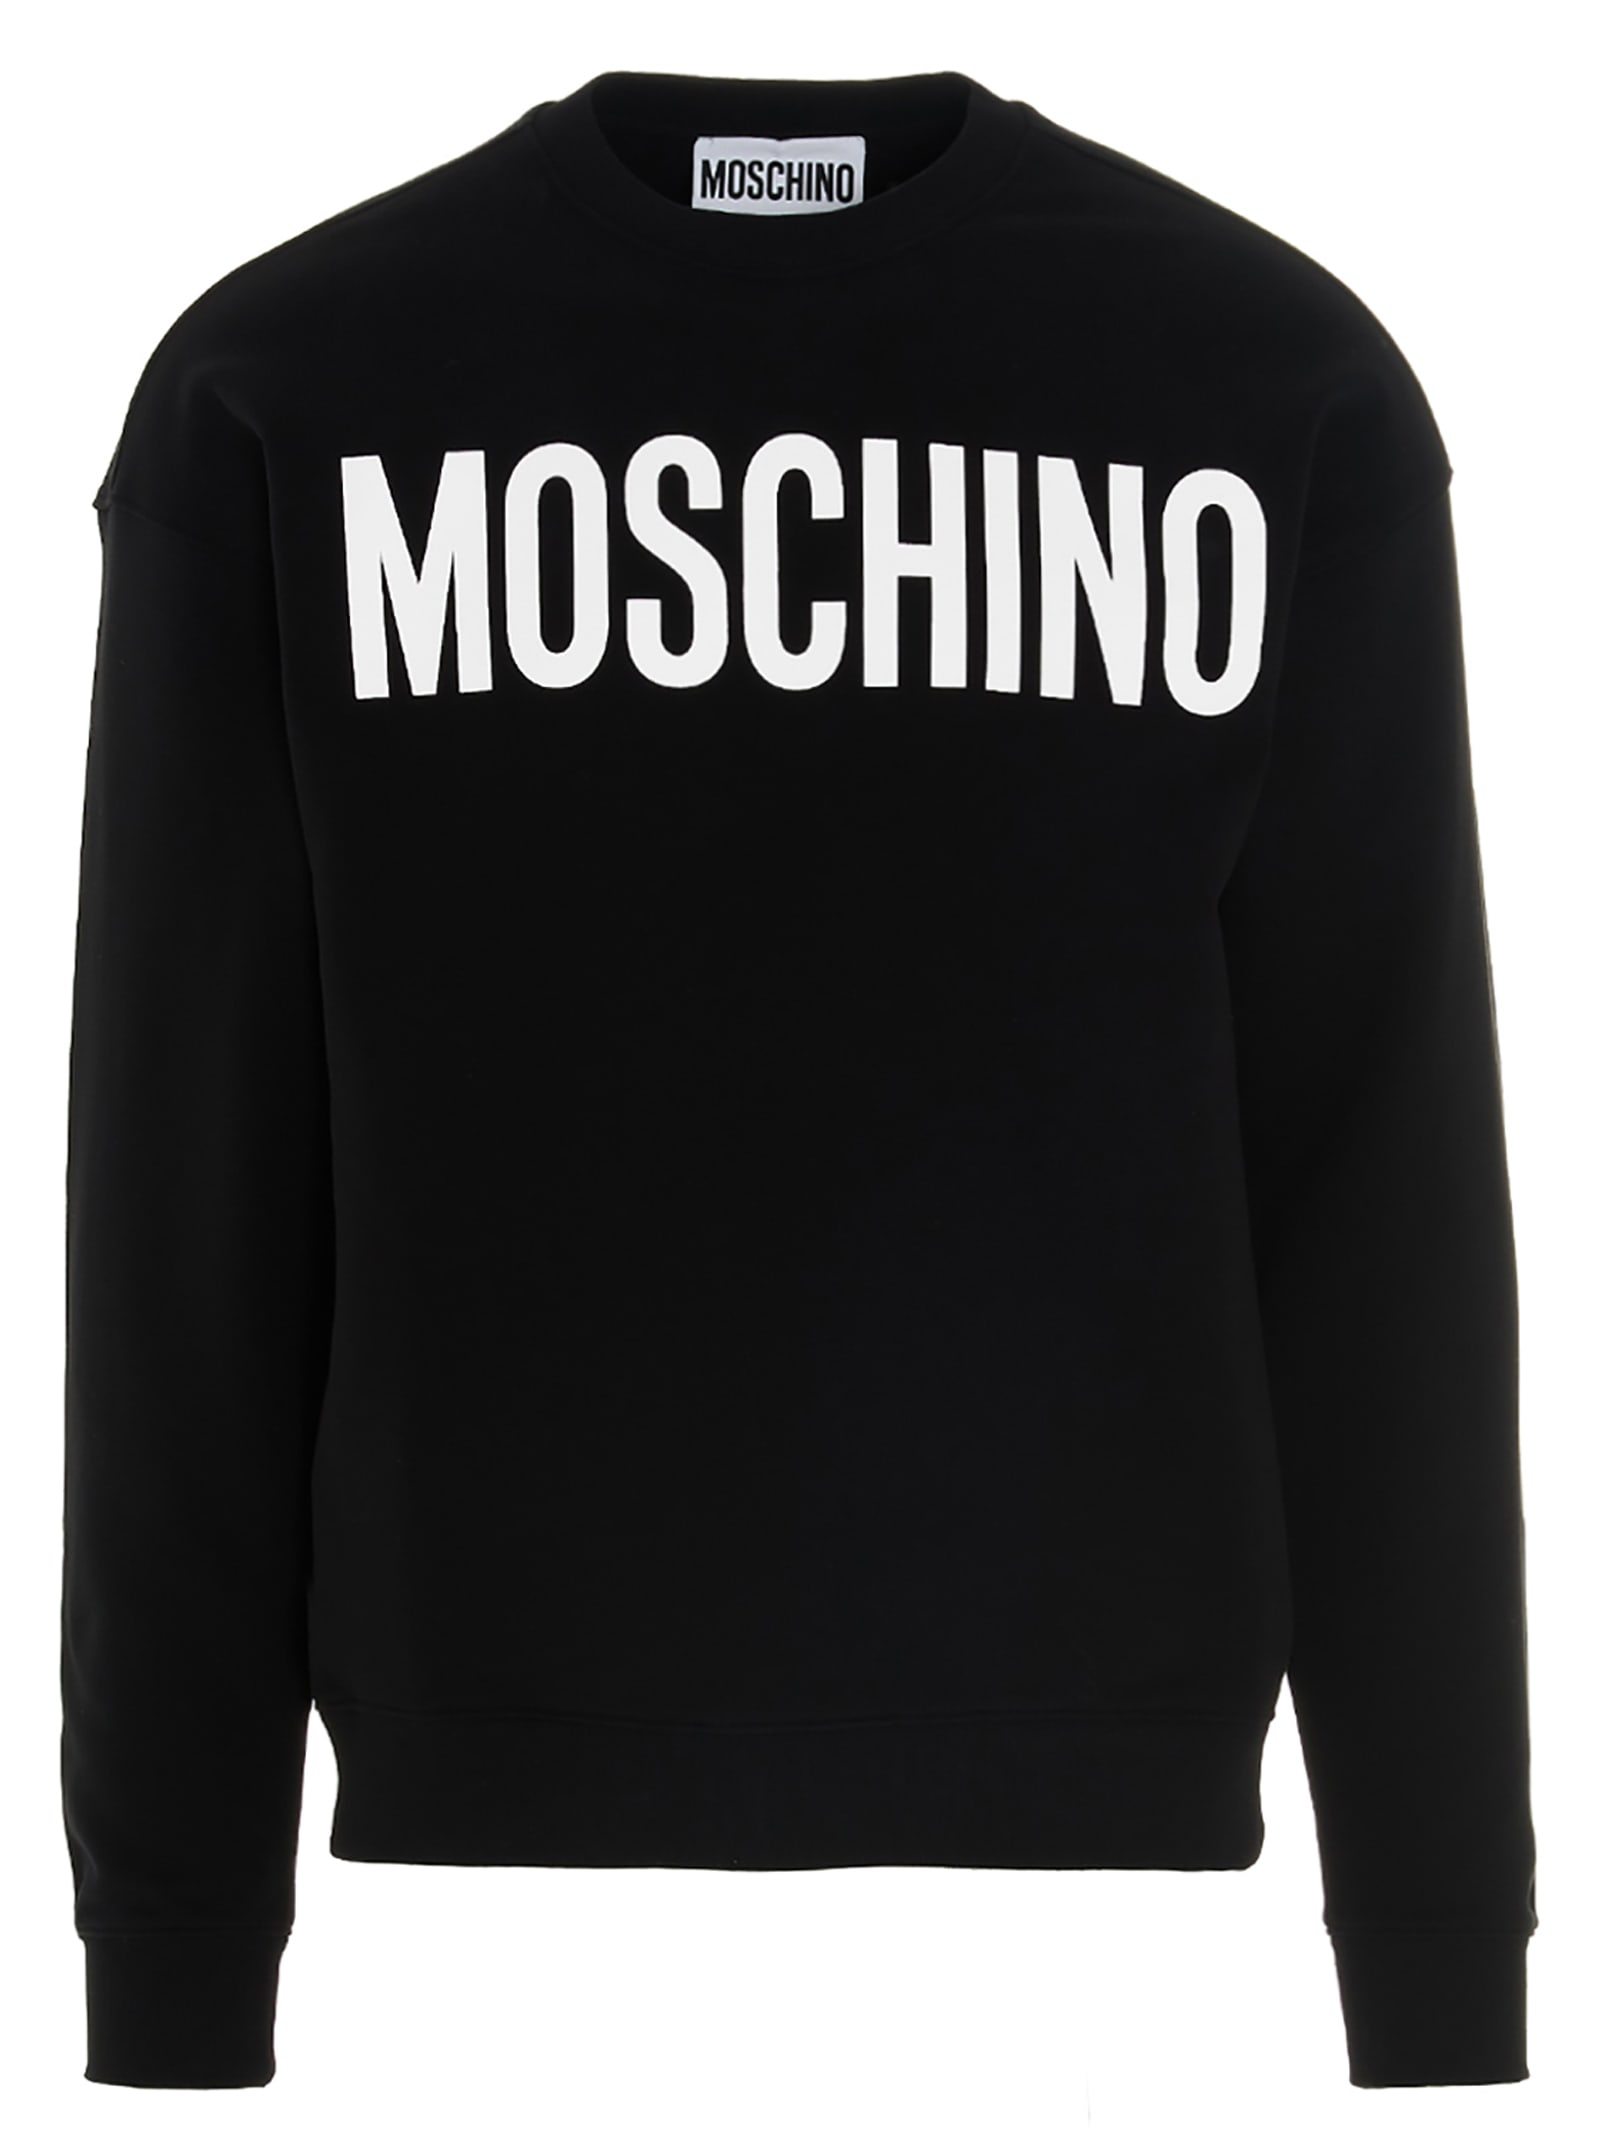 Moschino label Sweatshirt